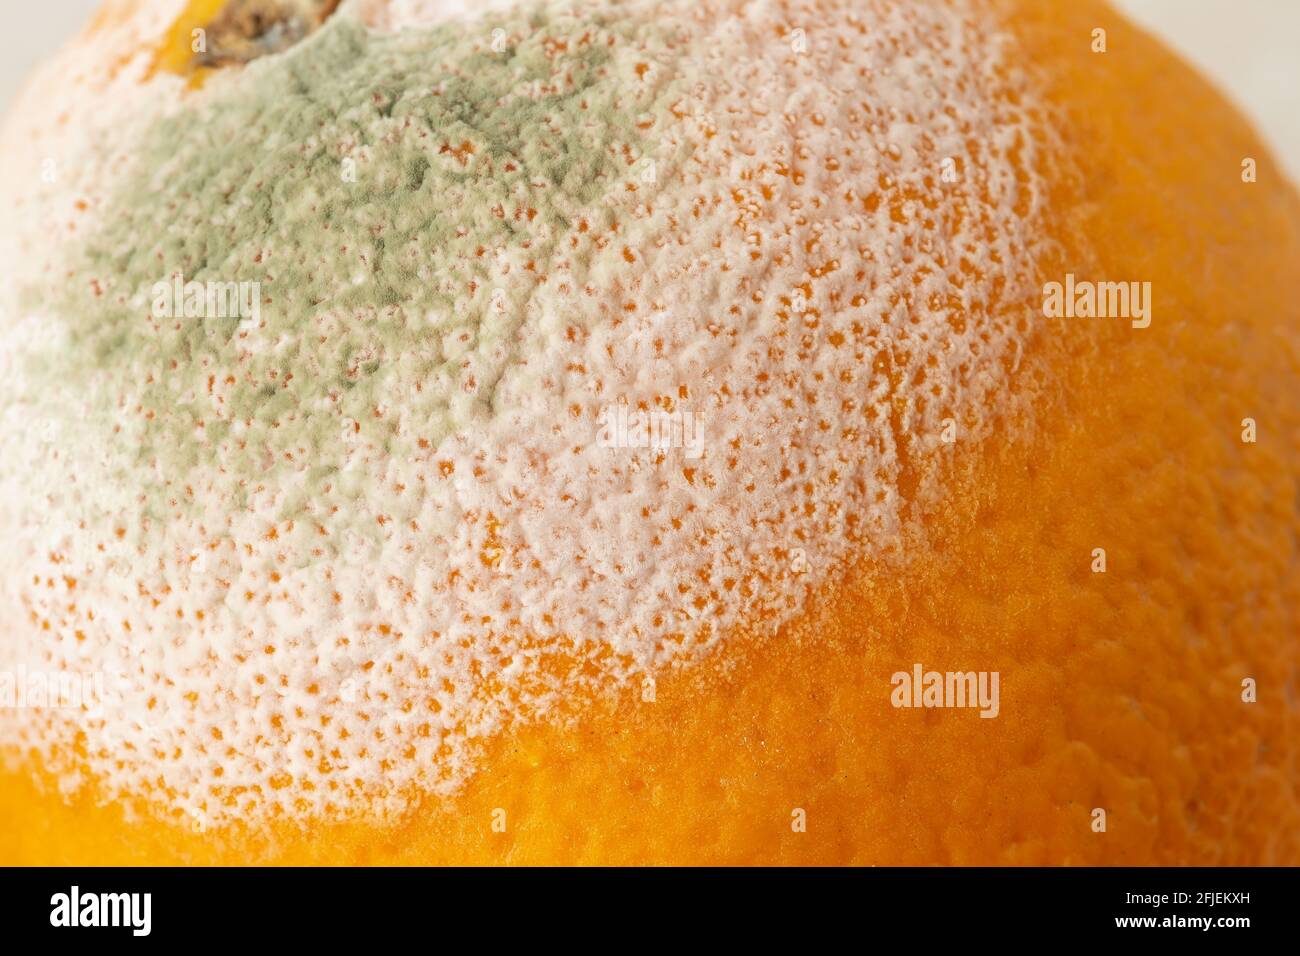 White green mold on the orange forgotten in the fridge. Macro shot of fungal mold on rotten citrus peel skin. Biodegradable food waste. Spoiled fruits Stock Photo